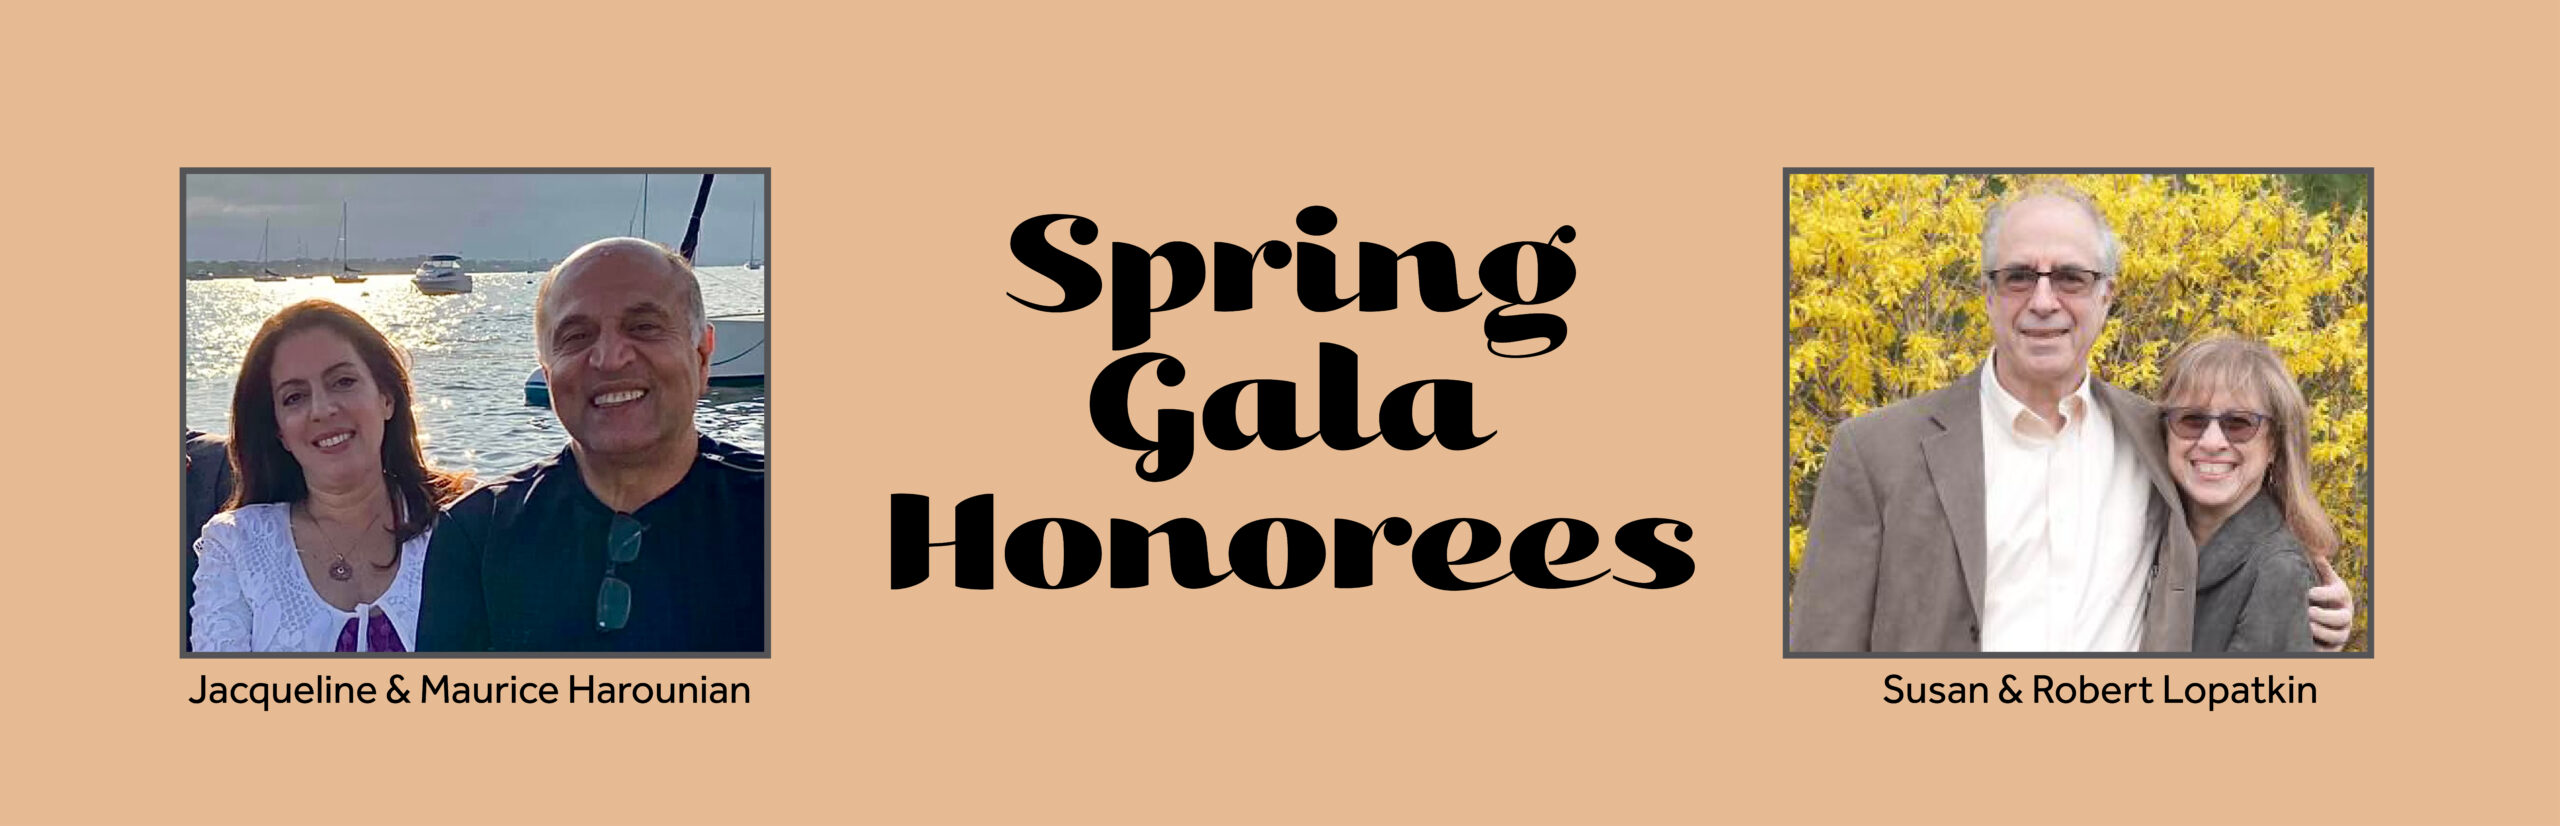 Spring Gala Honorees